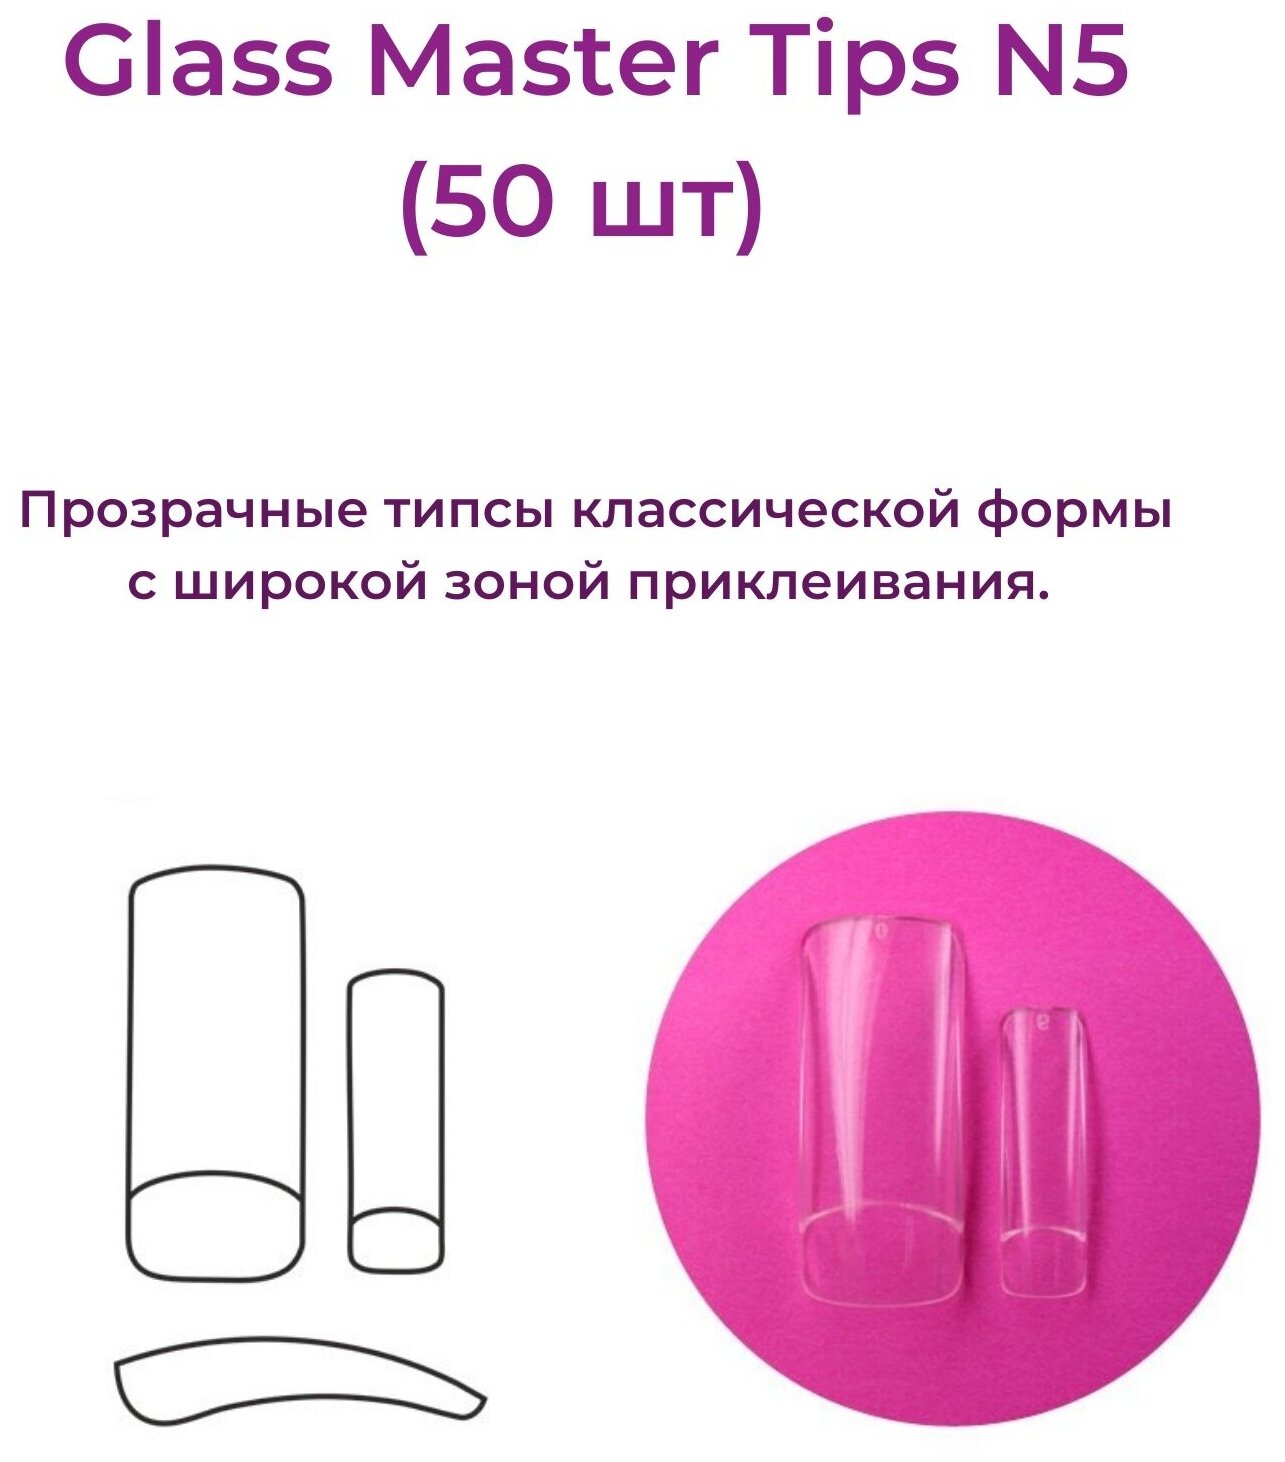 Alex Beauty Concept Типсы Glass Master Tips №5, (50 ШТ)